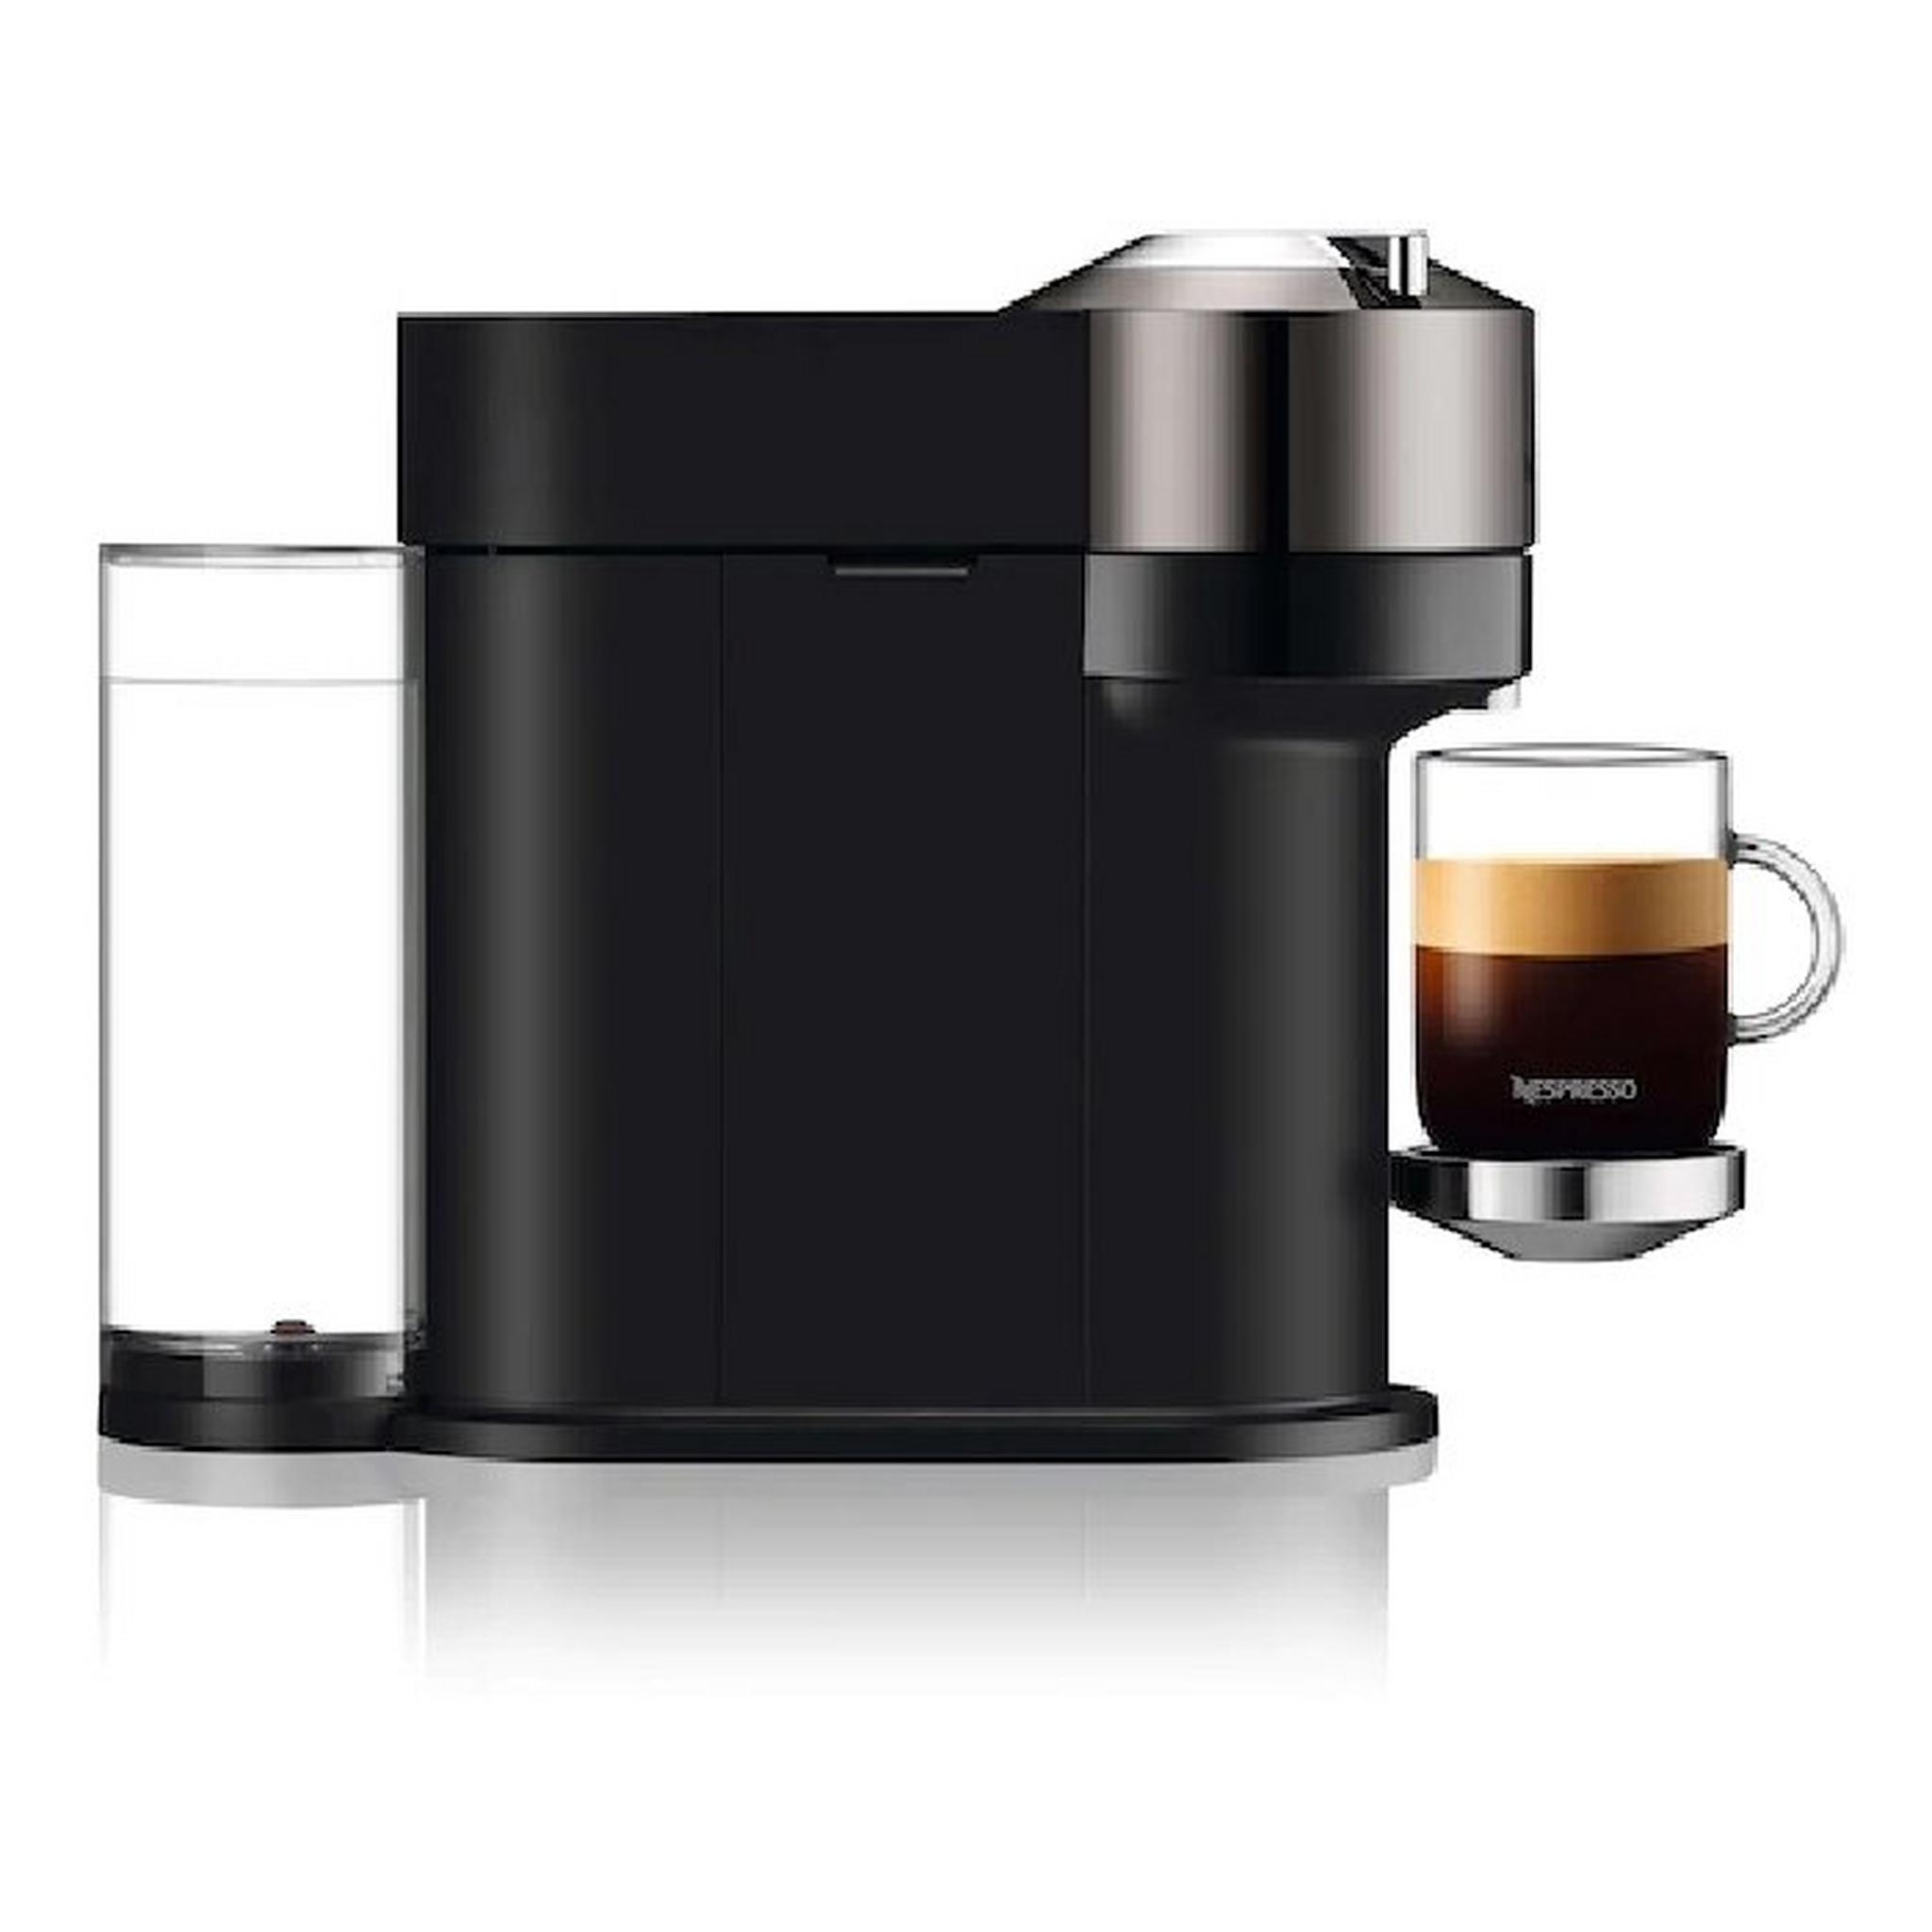 Nespresso Vertuo Next Coffee Maker - Chrome